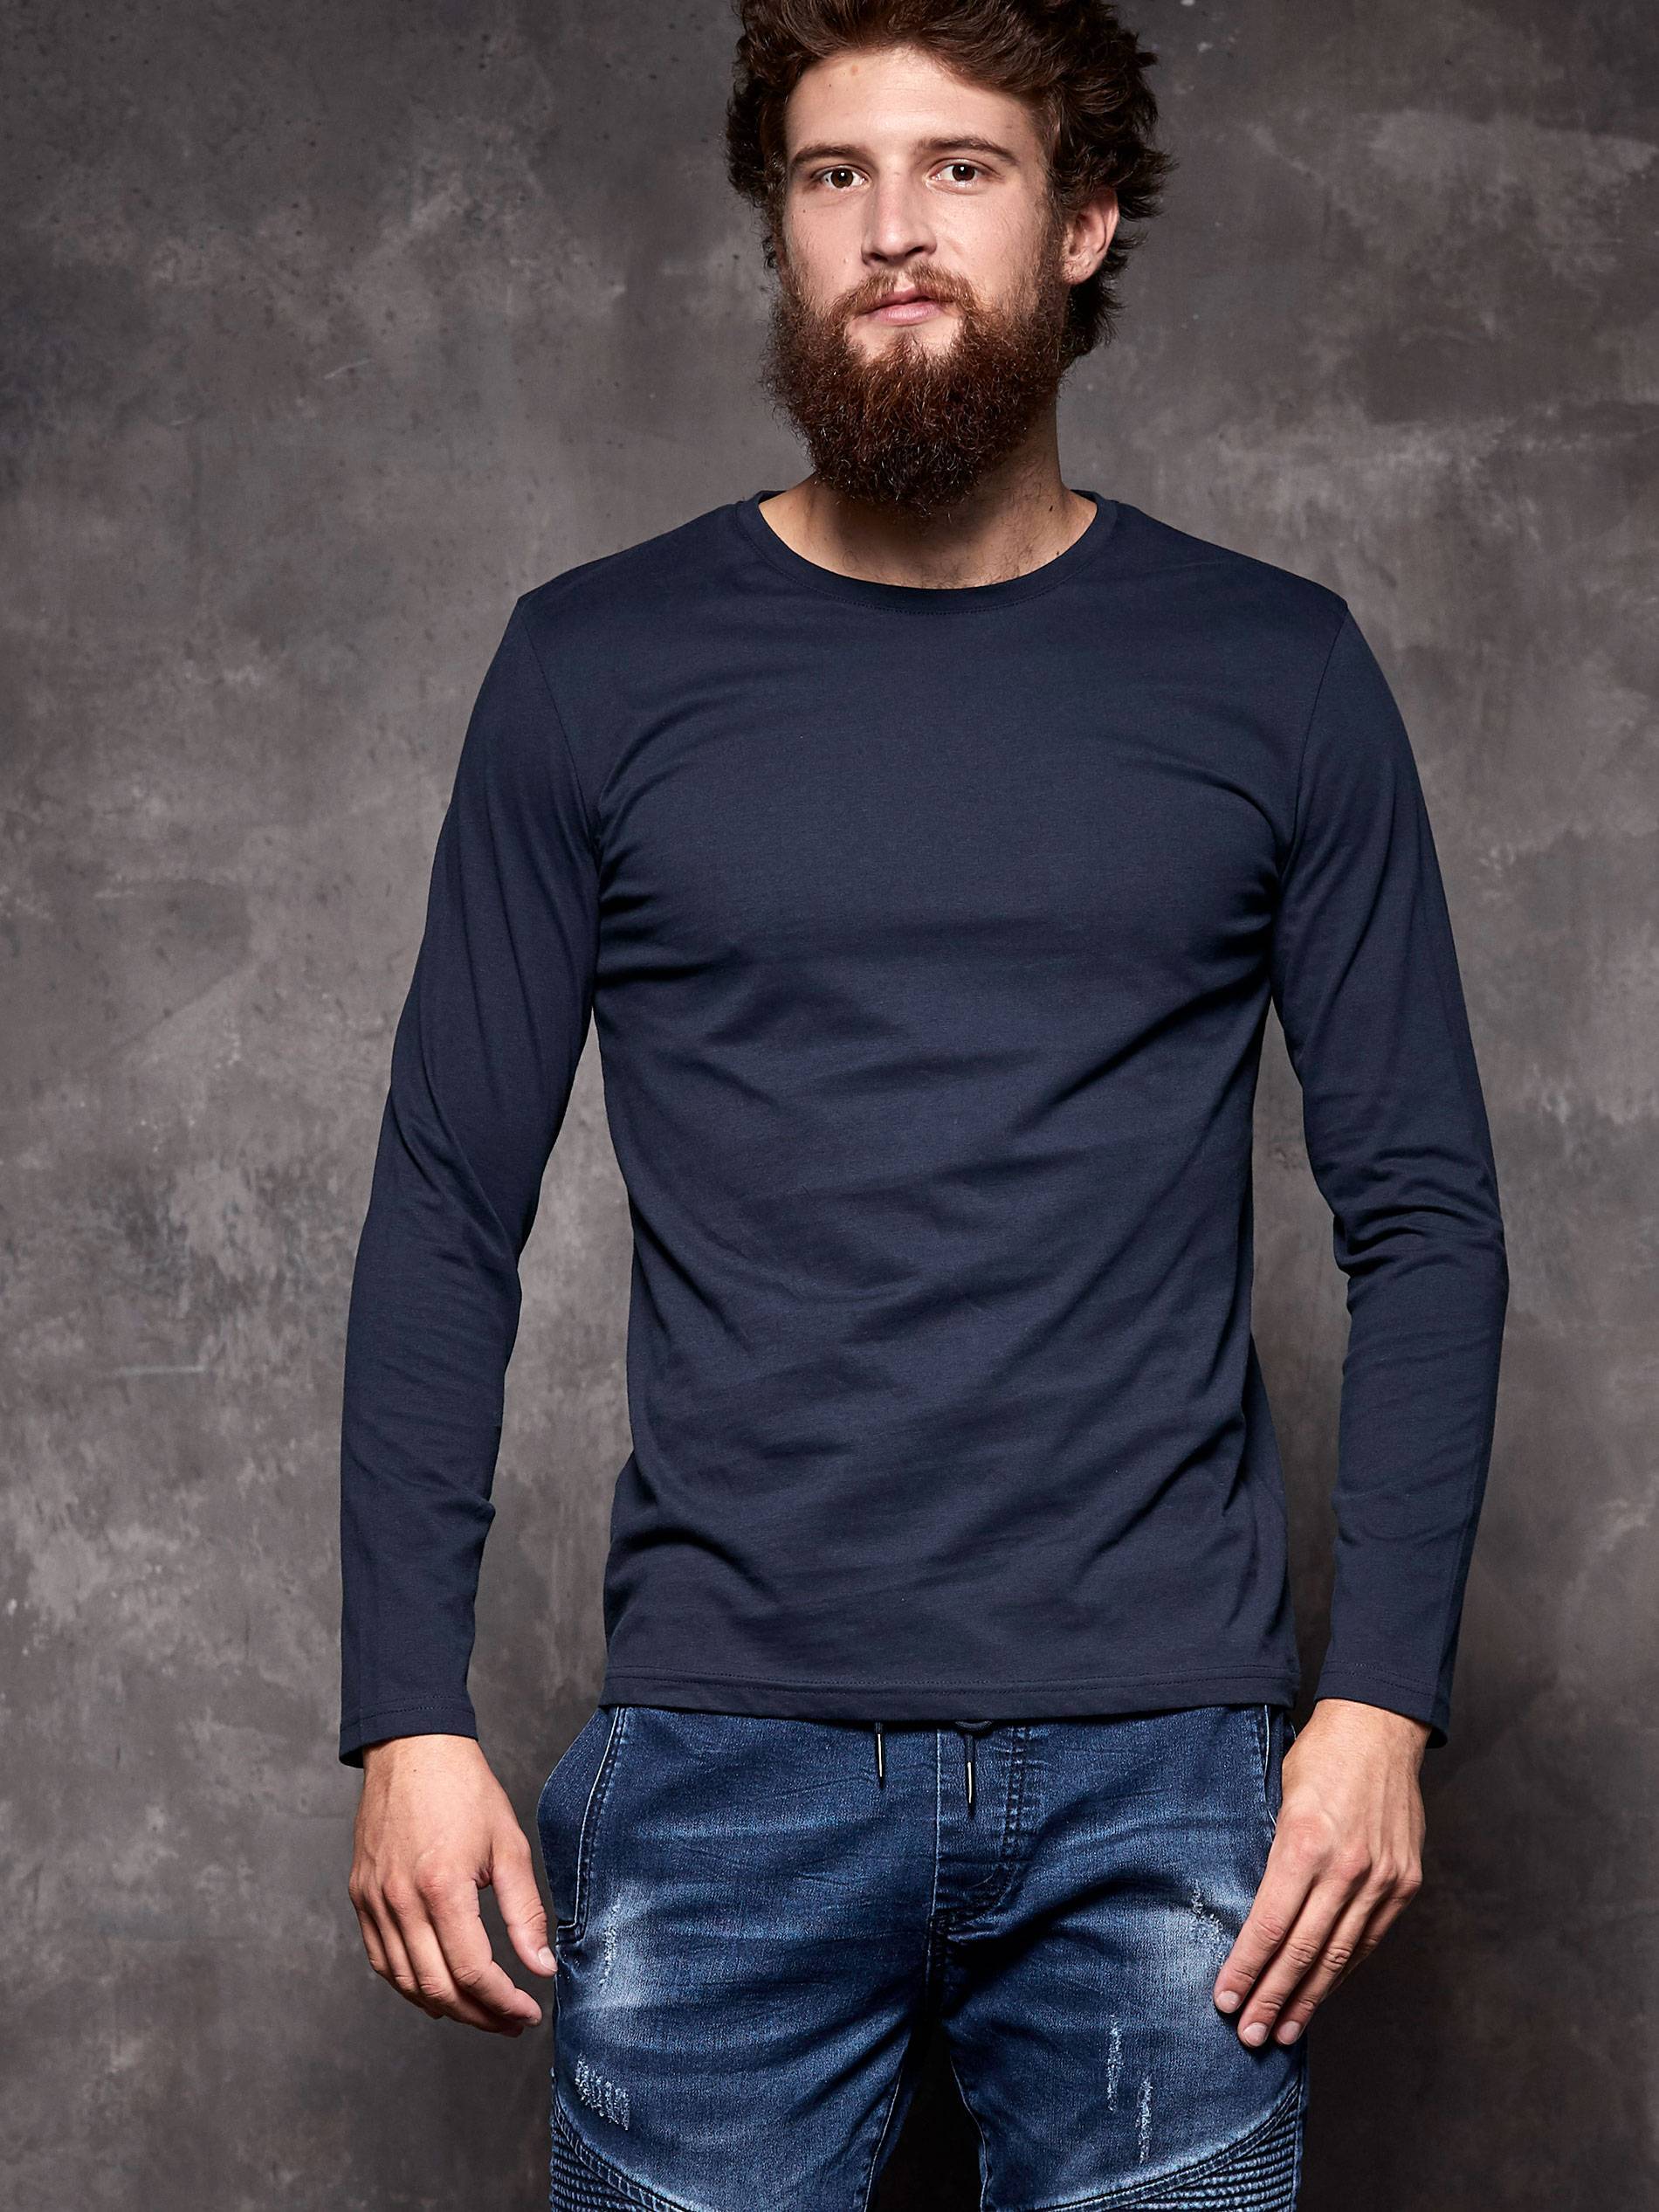 Buy > grey full sleeve t shirt mens > in stock